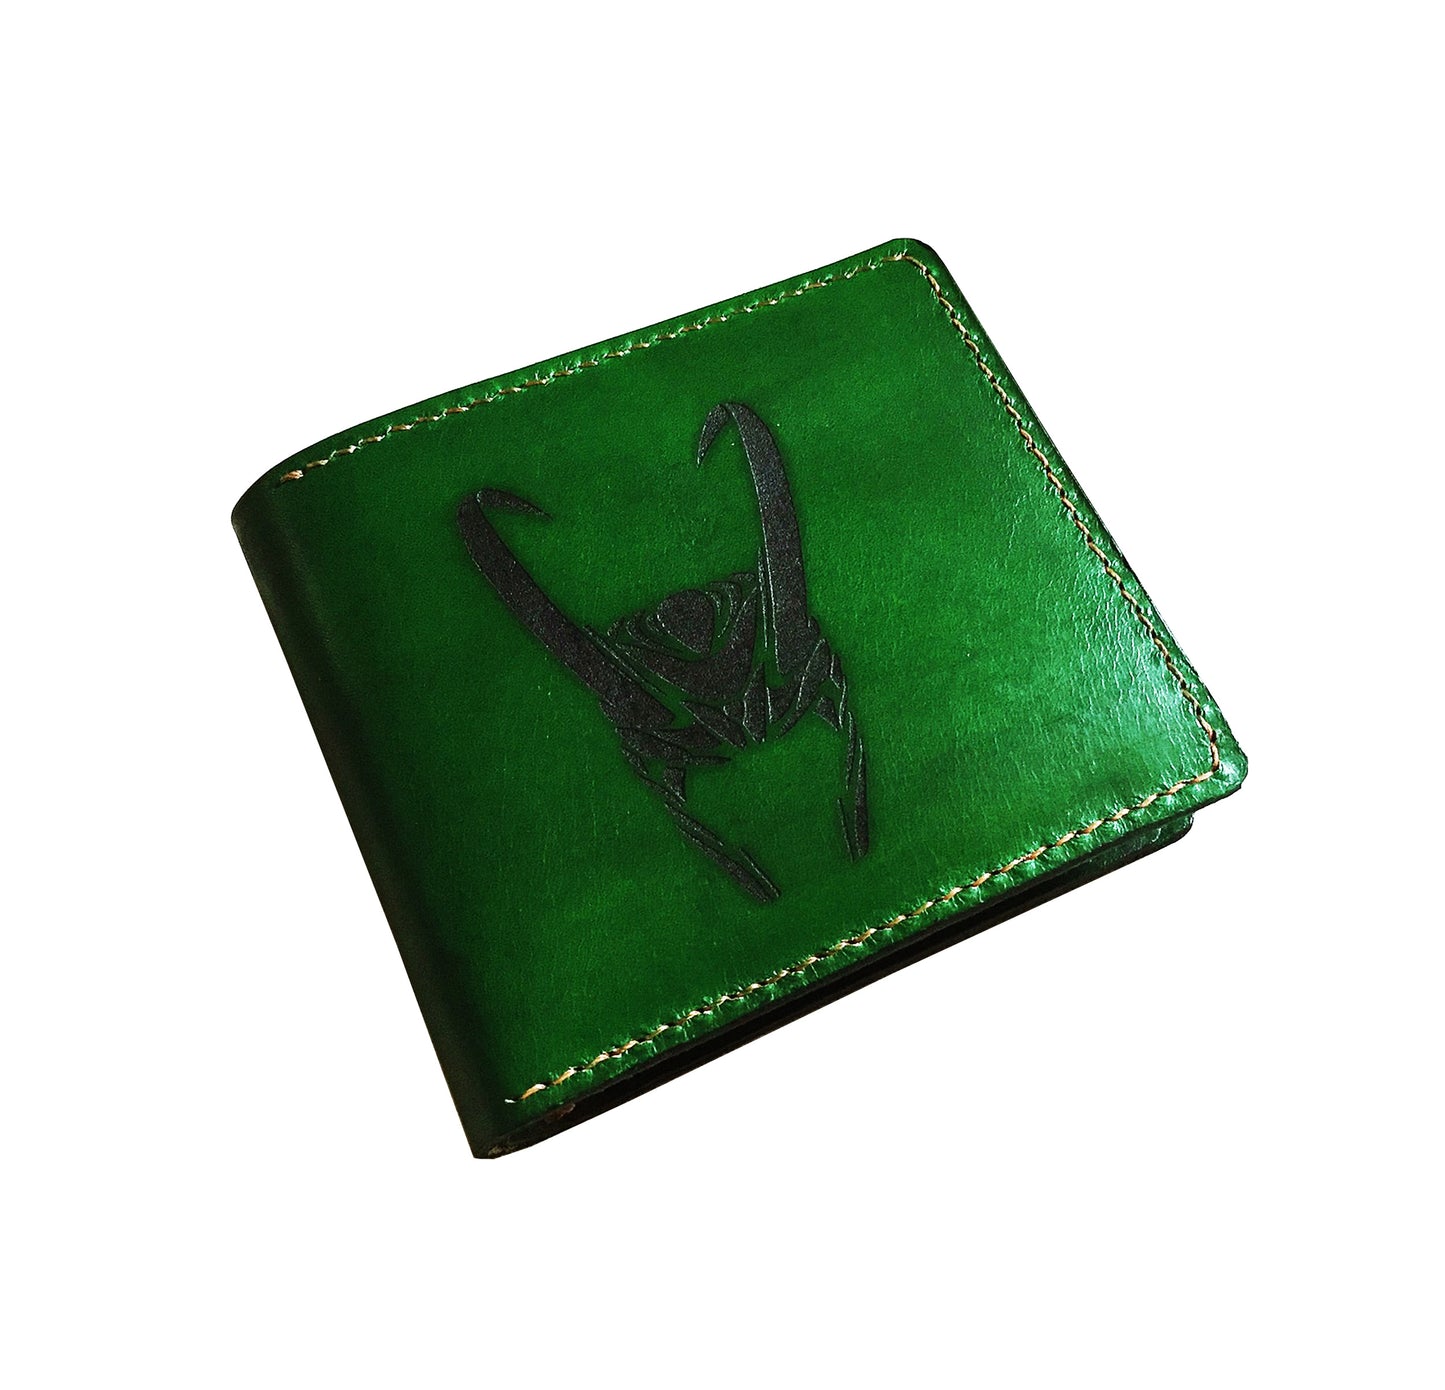 Mayan Corner - Superheroes leather handmade wallet, customized men's wallet, Leather gift ideas for men - Winter Soldier Star logo wallet